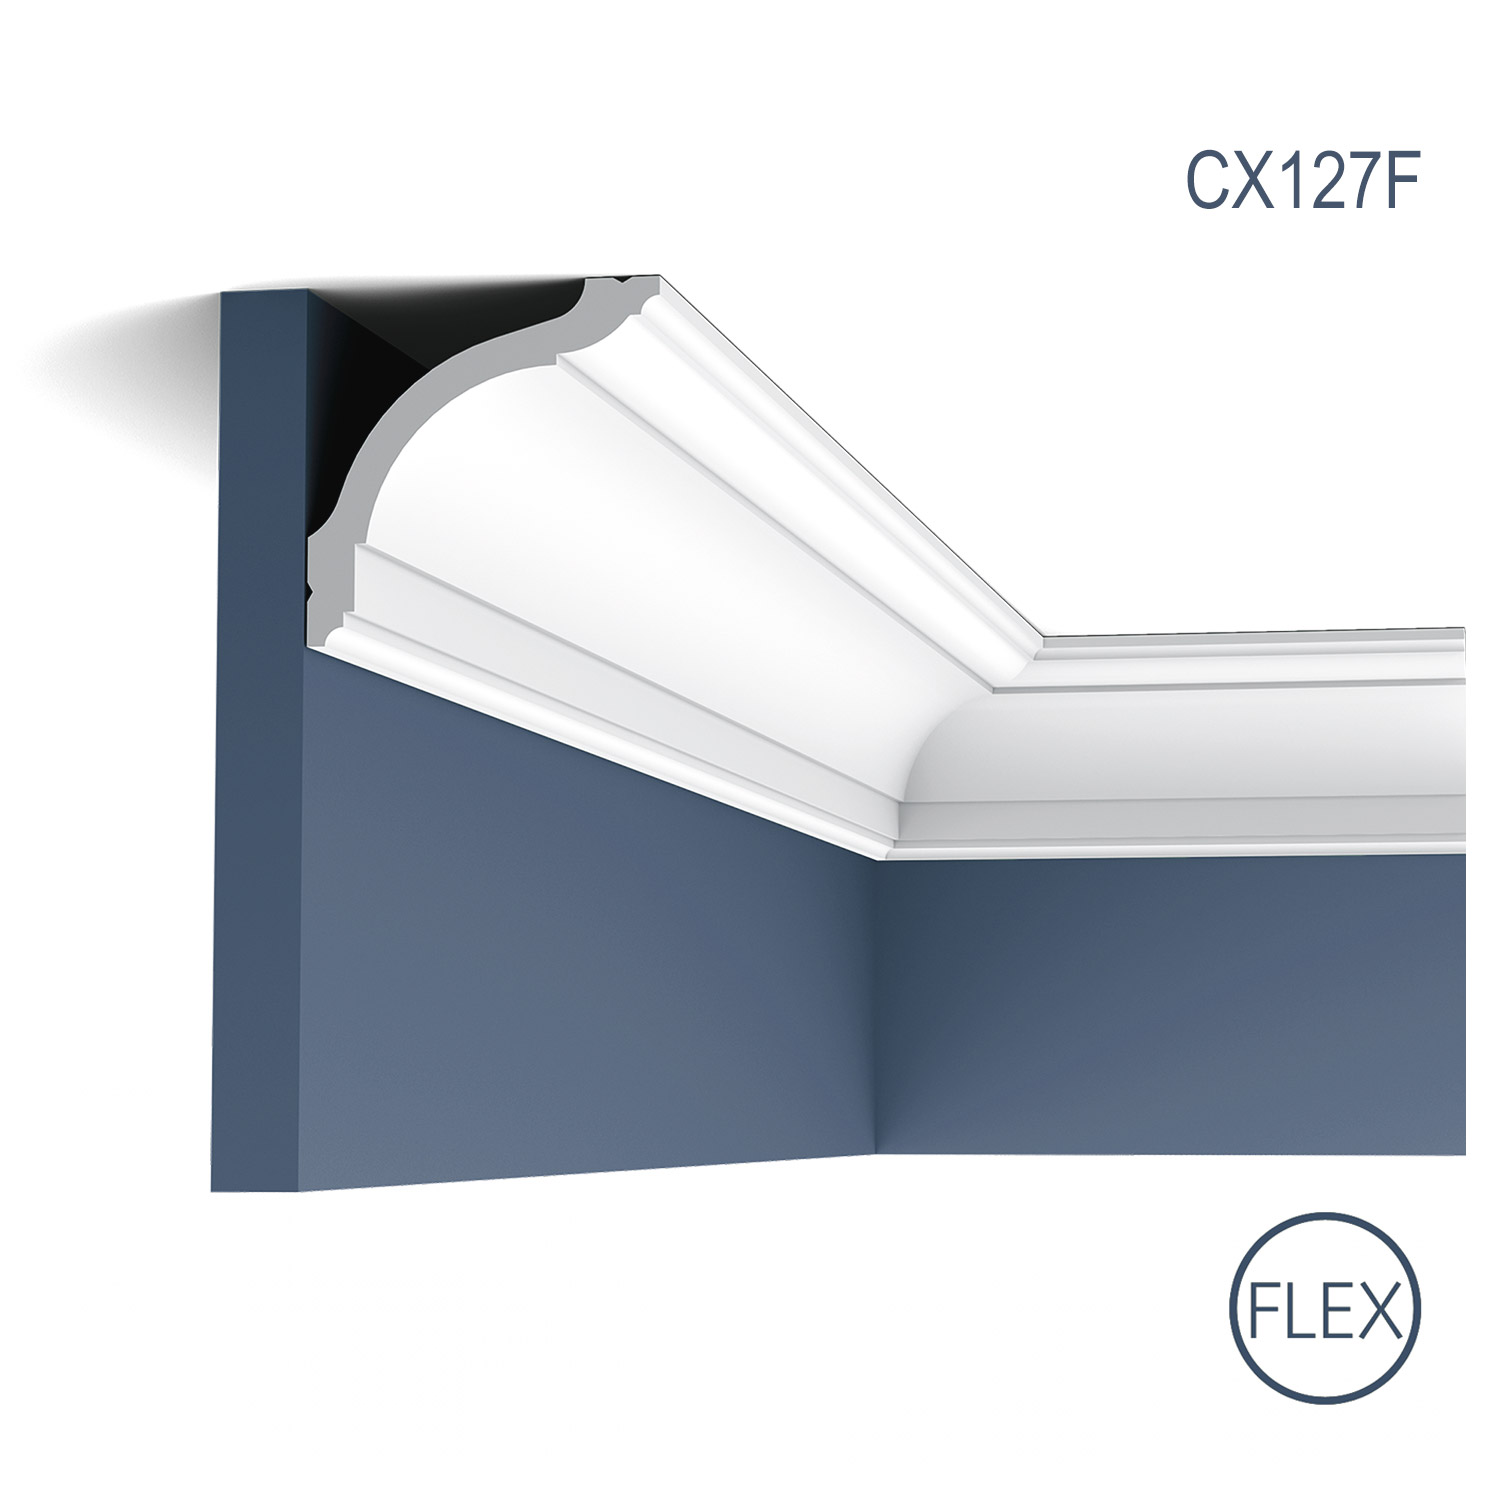 Cornisa Flex Axxent CX127F, Dimensiuni: 200 X 9.4 X 9.4 cm, Orac Decor Orac Decor